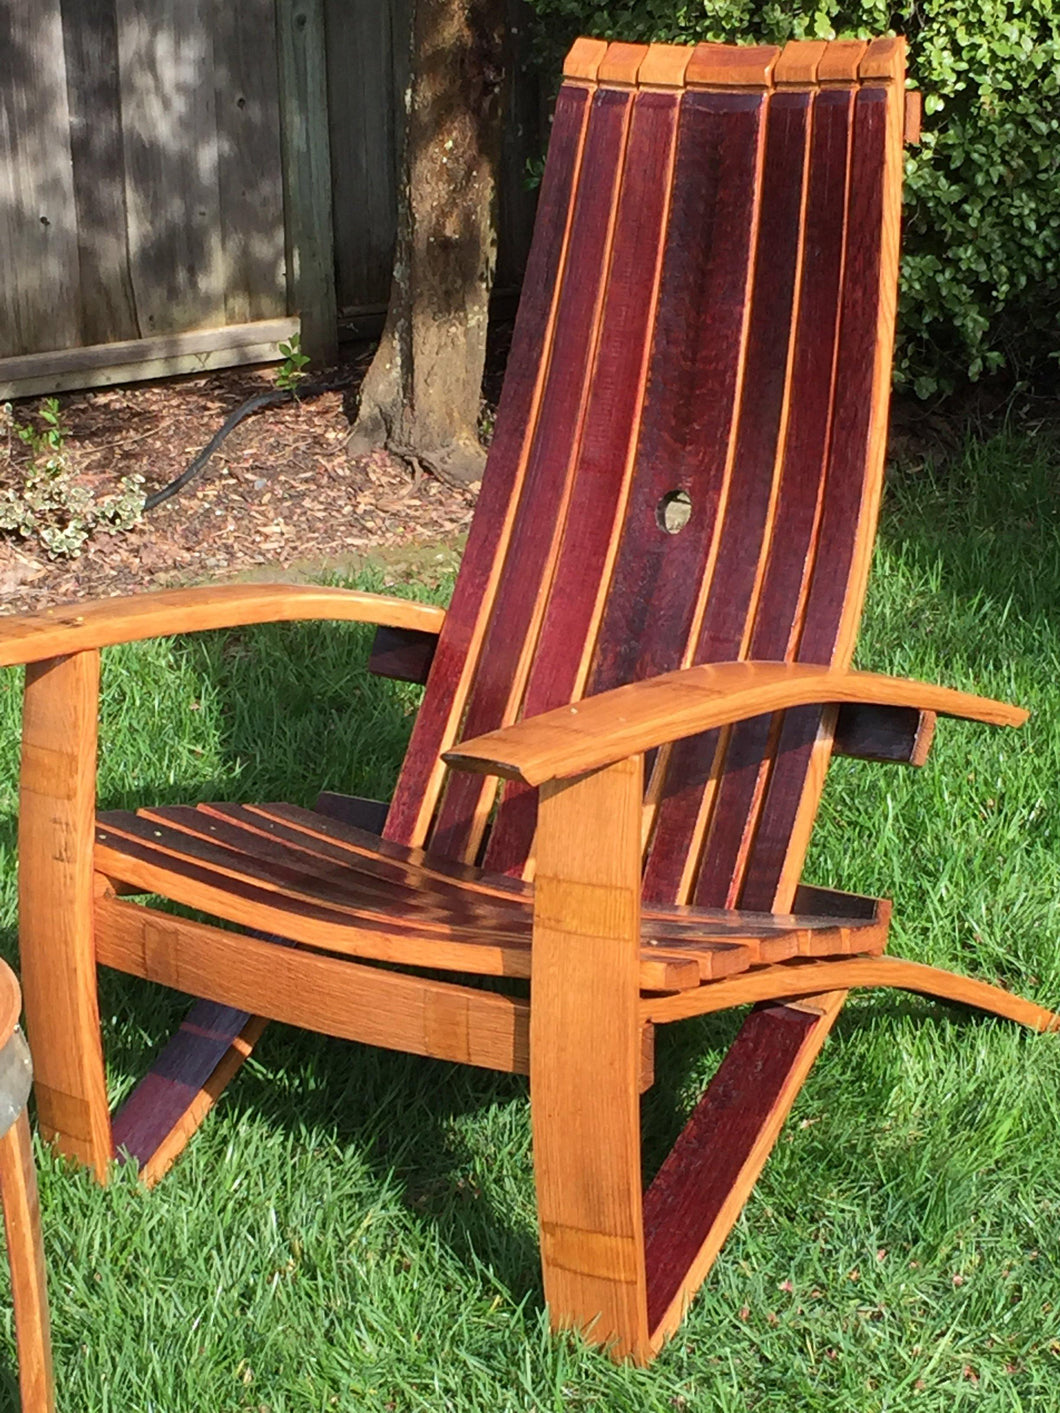 Winefrill - Wine Barrel Adirondack Chair